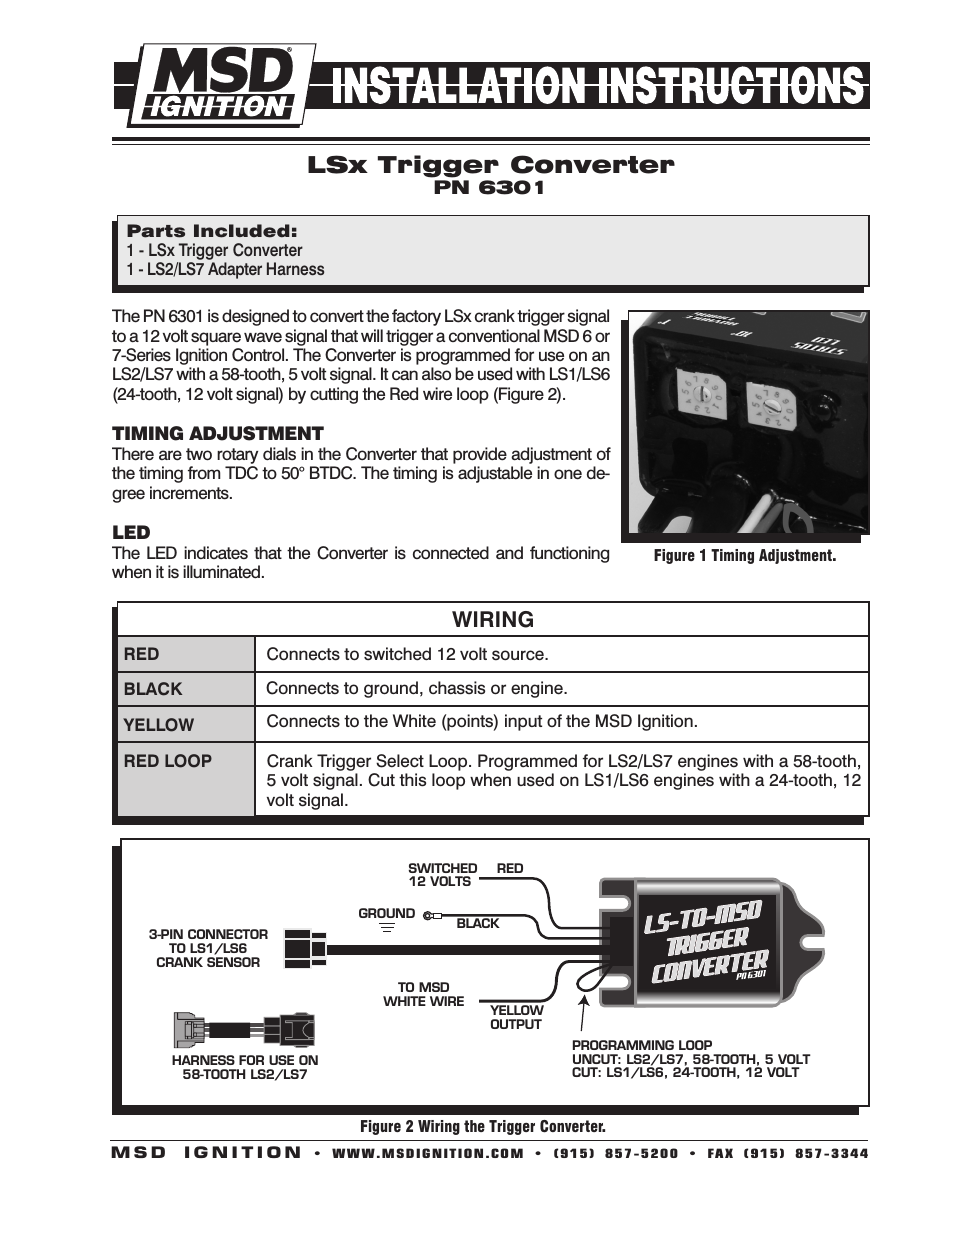 6301 LSx Trigger Converter-to-MSD Ignition Installation